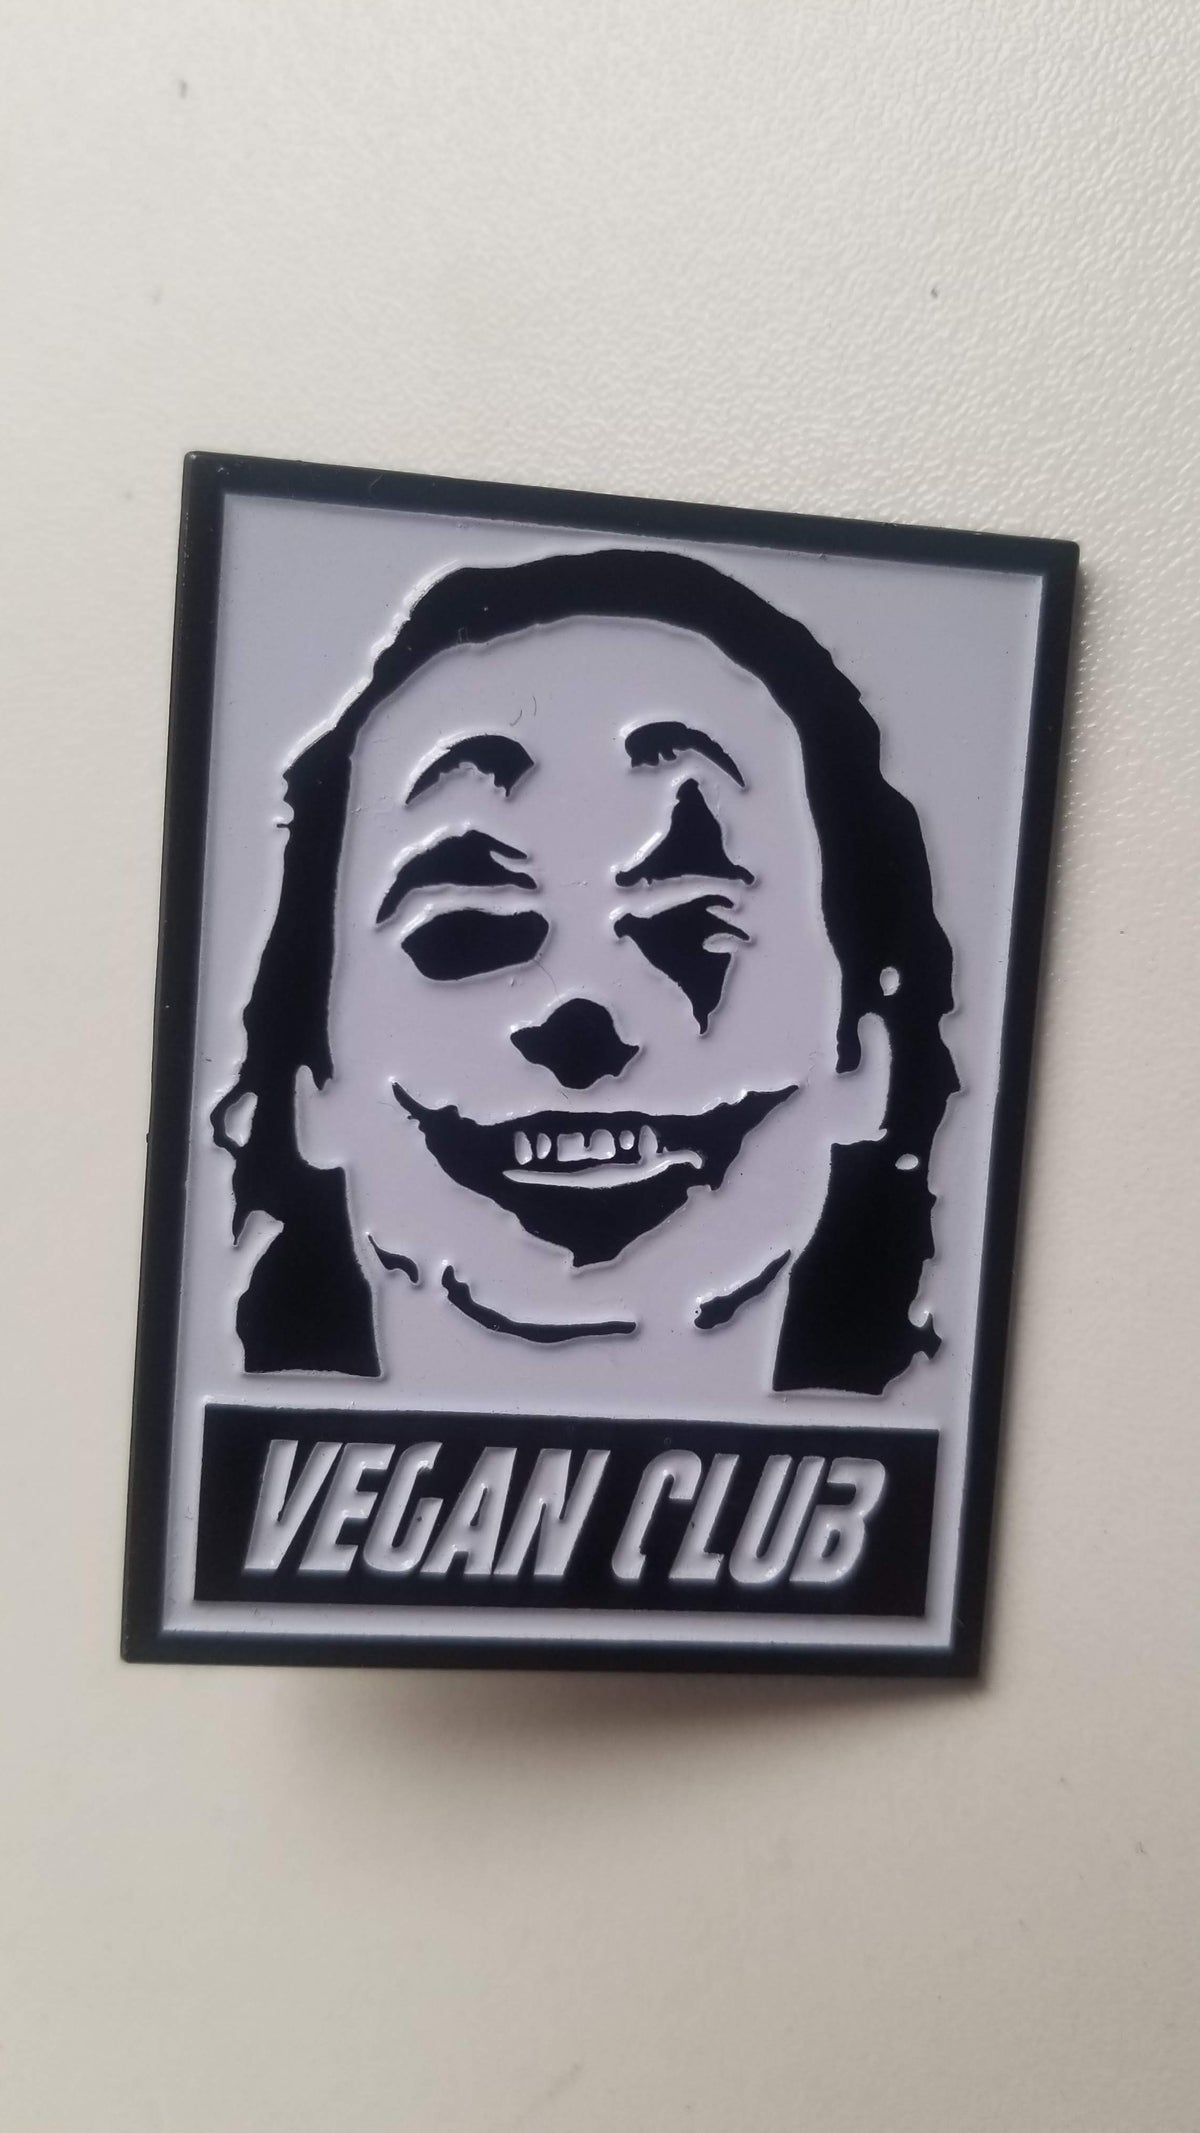 Vegan Club Pin featuring the Joker